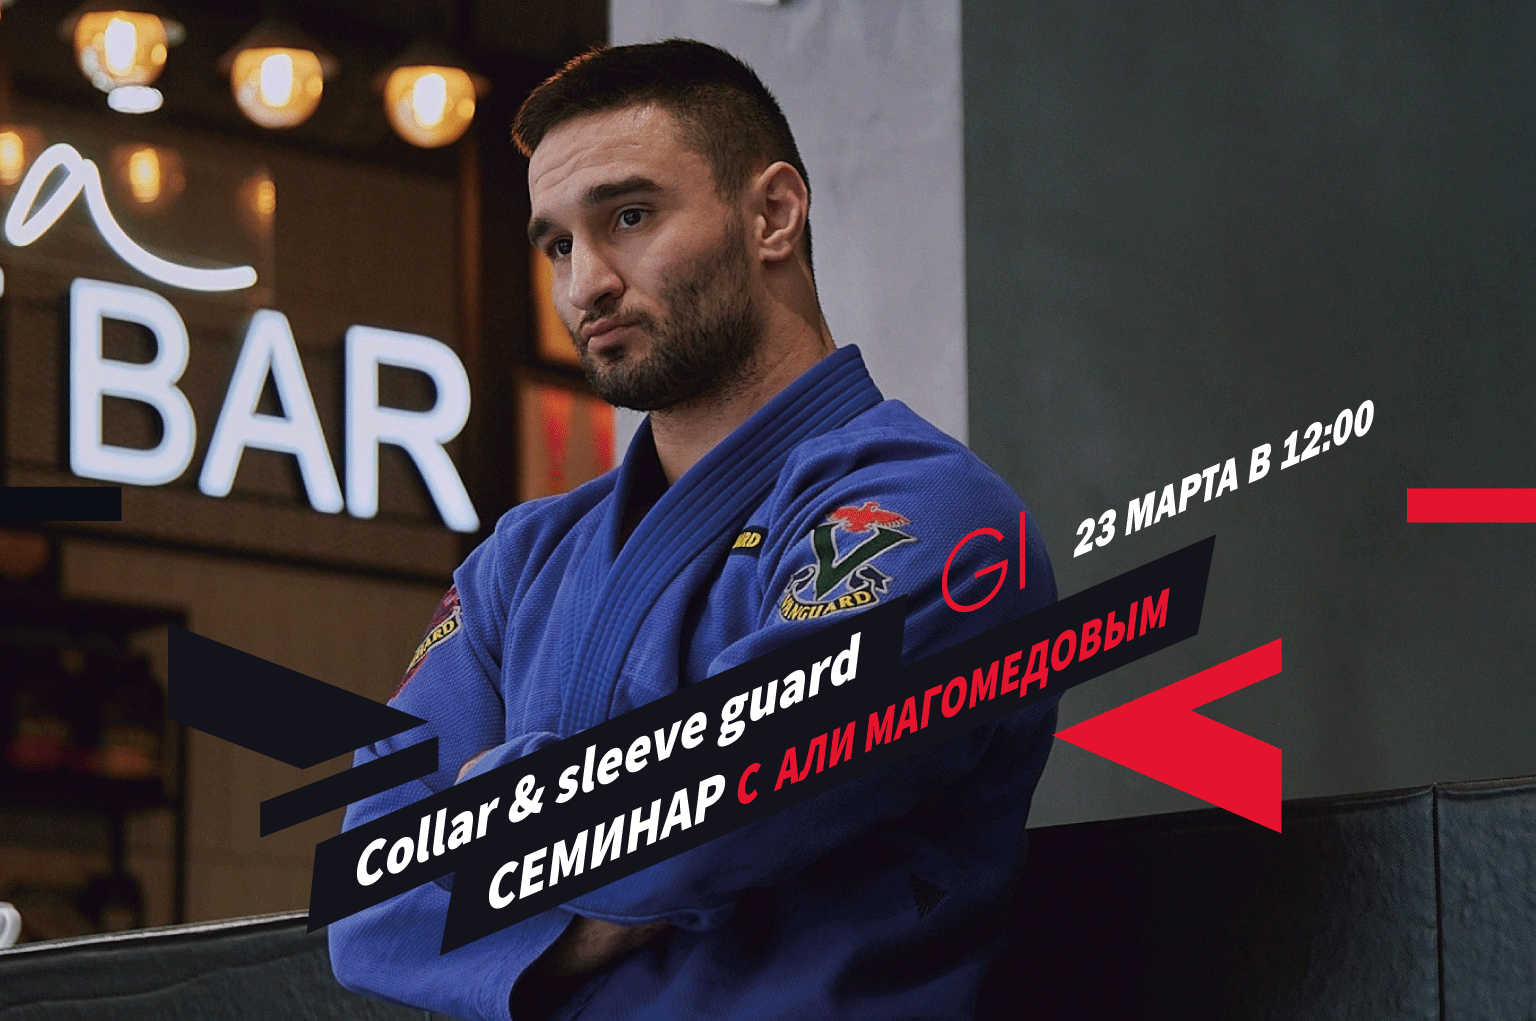 Семинар «Collar&Sleeve guard » с Али Магомедовым 23 марта.